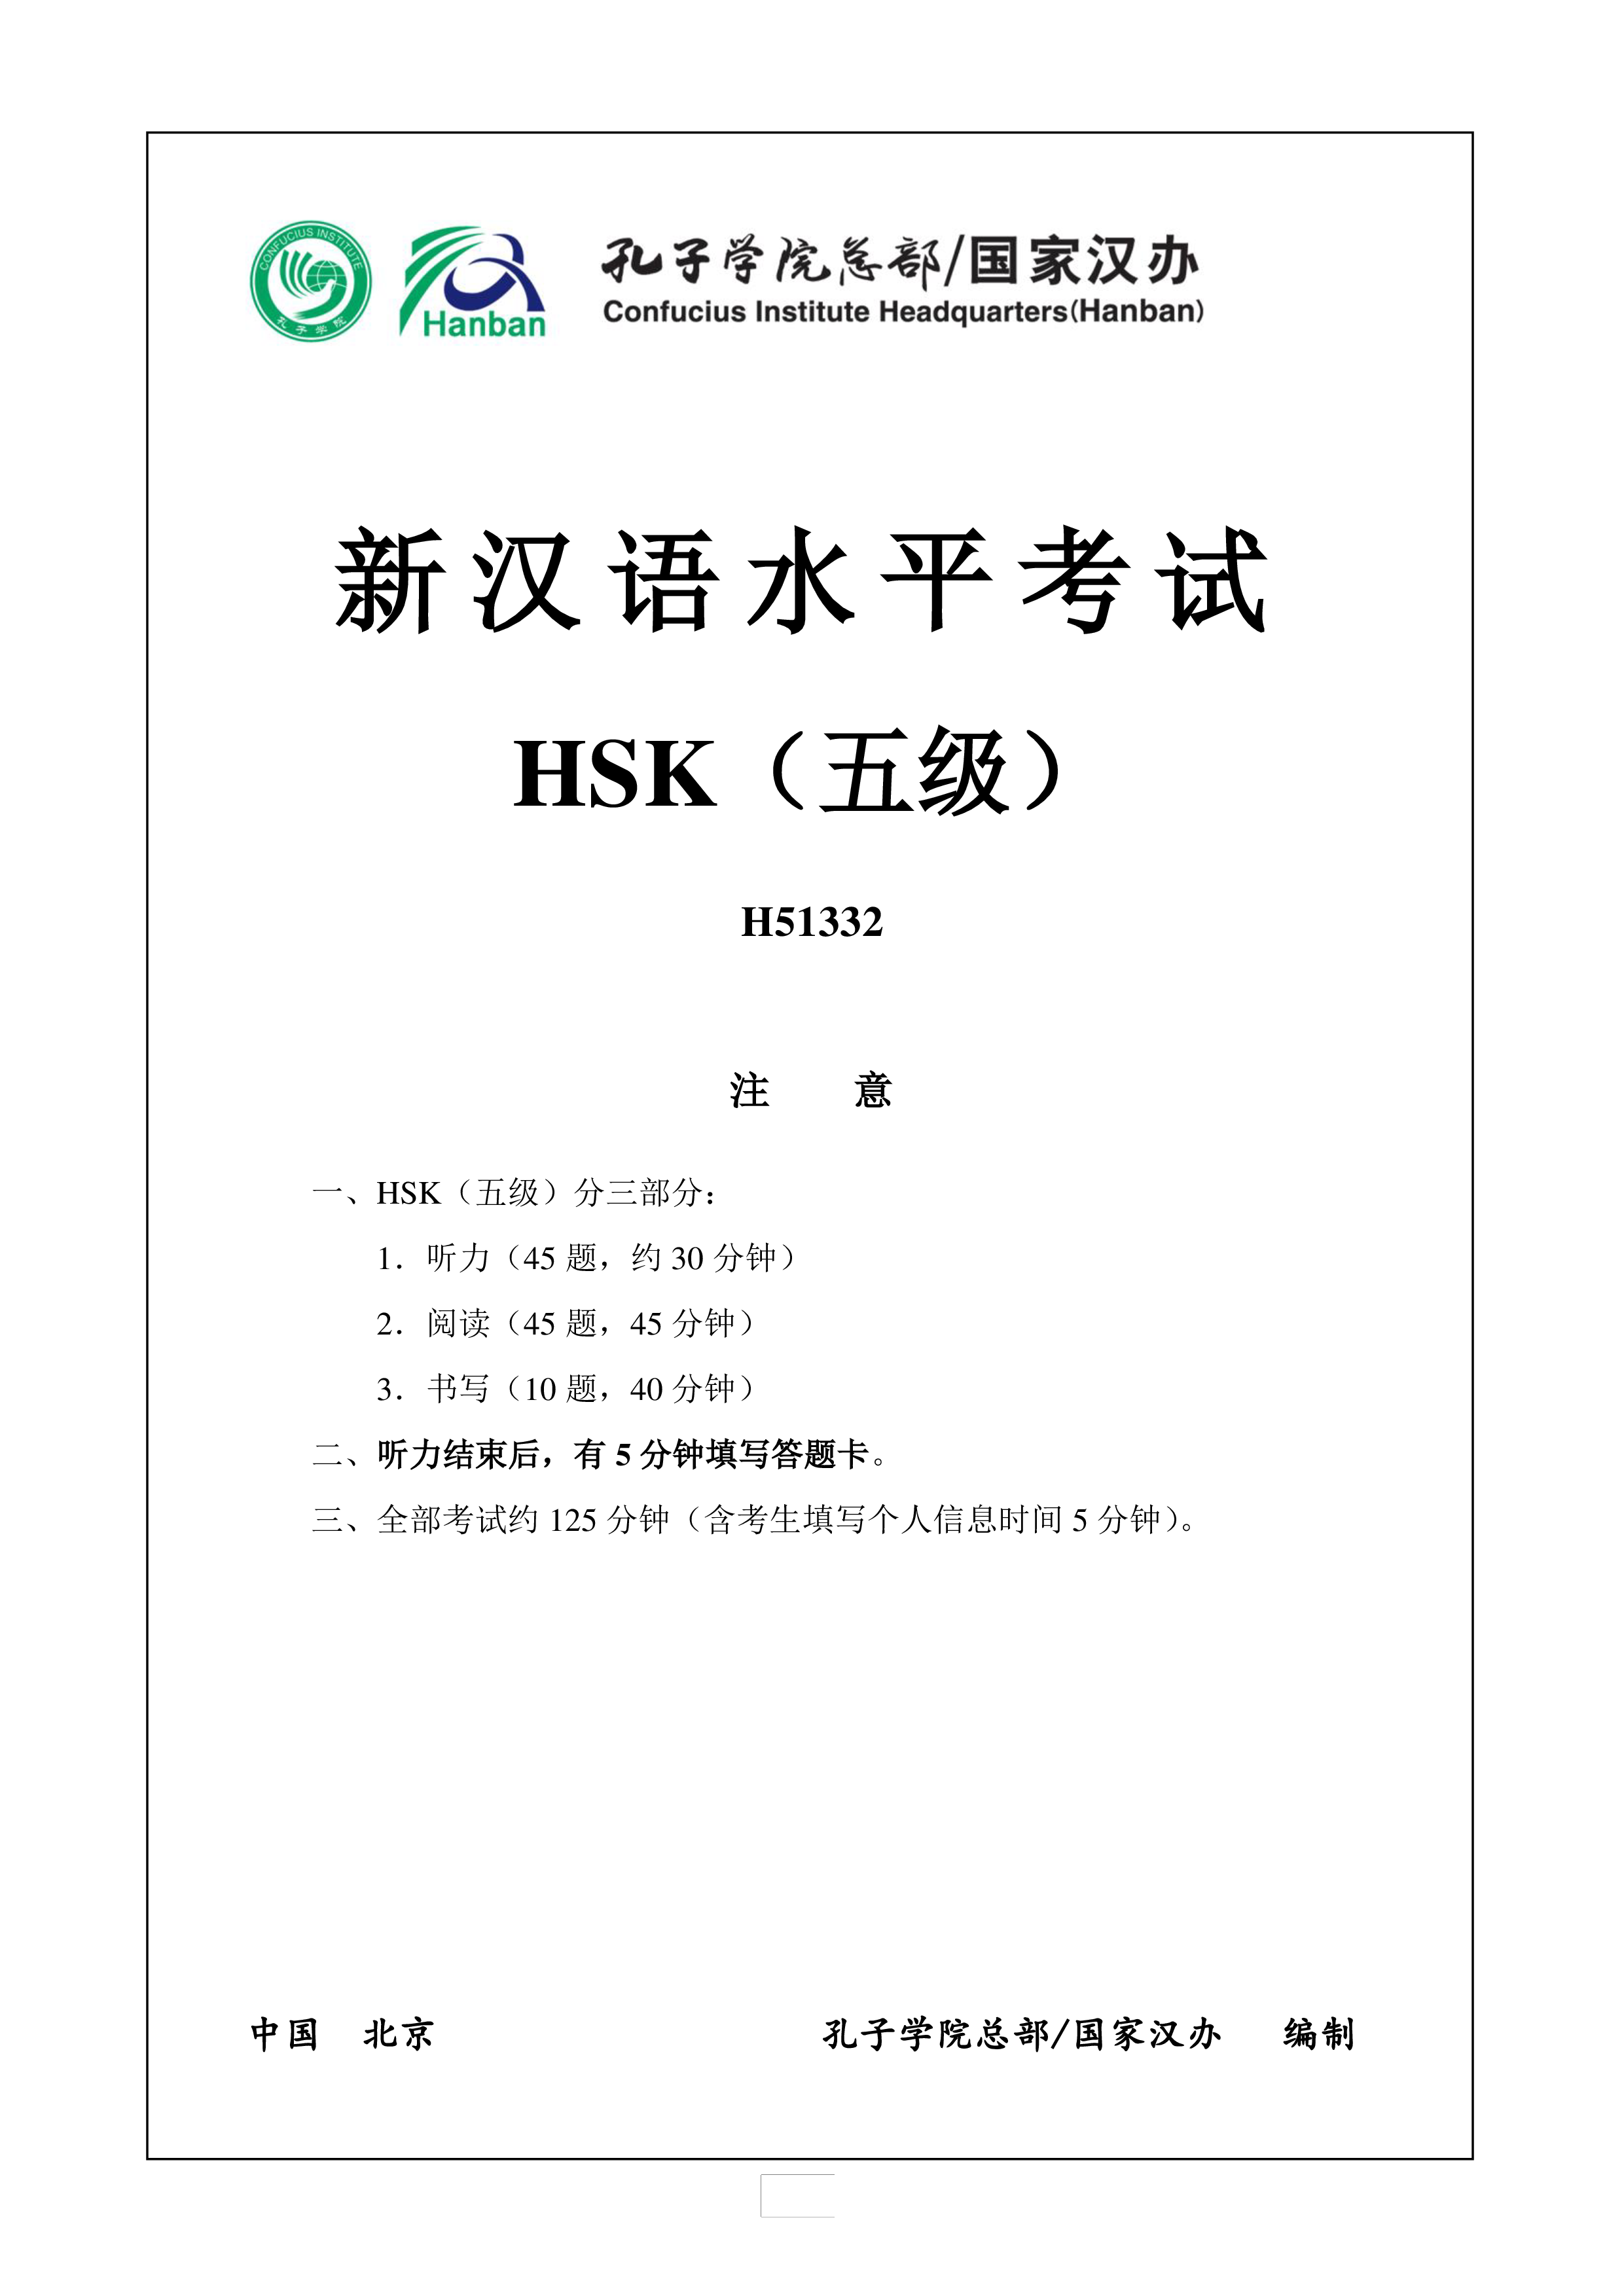 hsk5 chinese exam, incl audio and answer # h51332 plantilla imagen principal